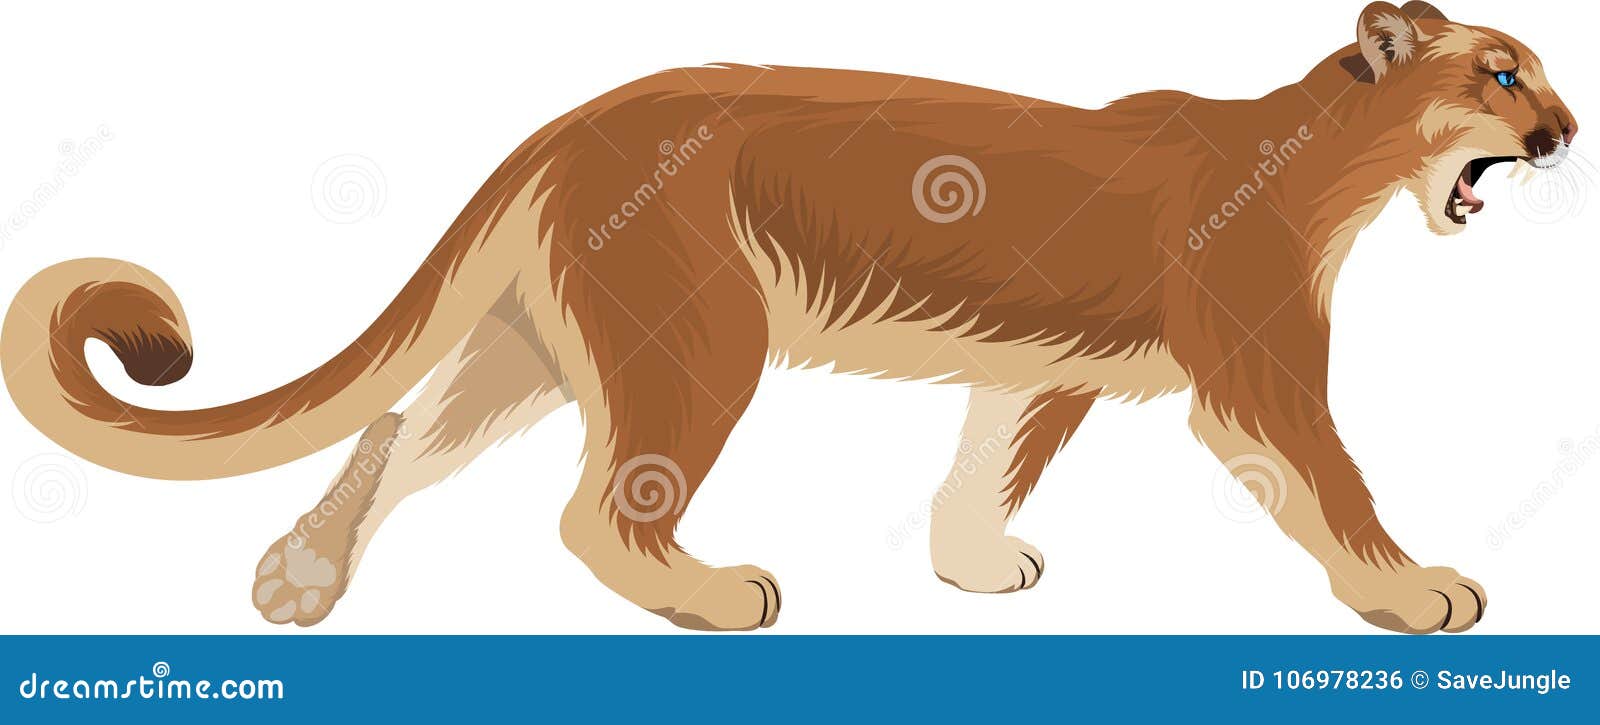  puma cougar puma concolor or mountain lion